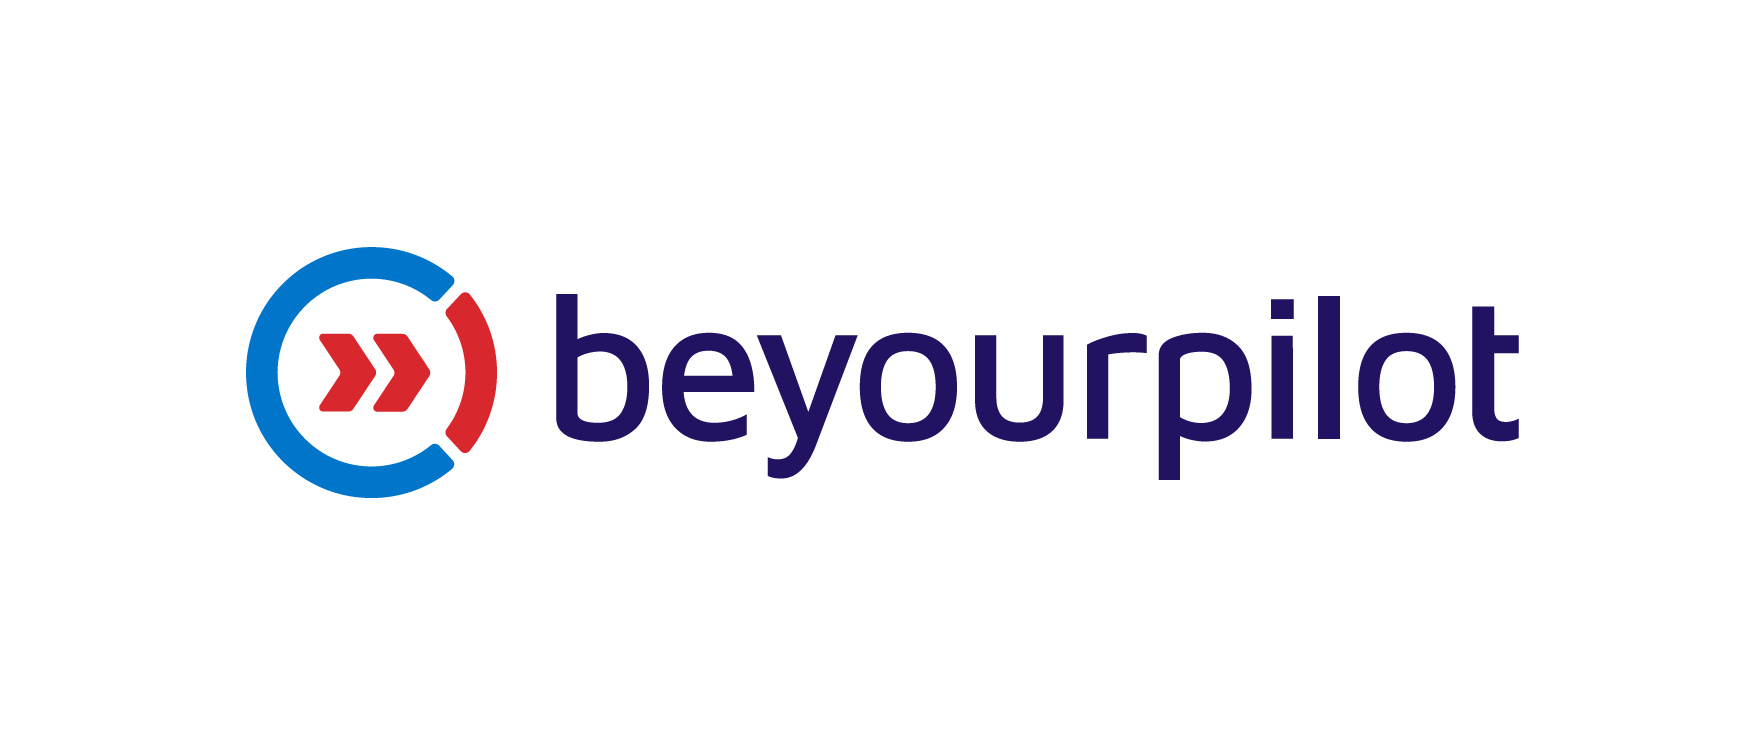 beyourpilotpluslogo.jpg logo